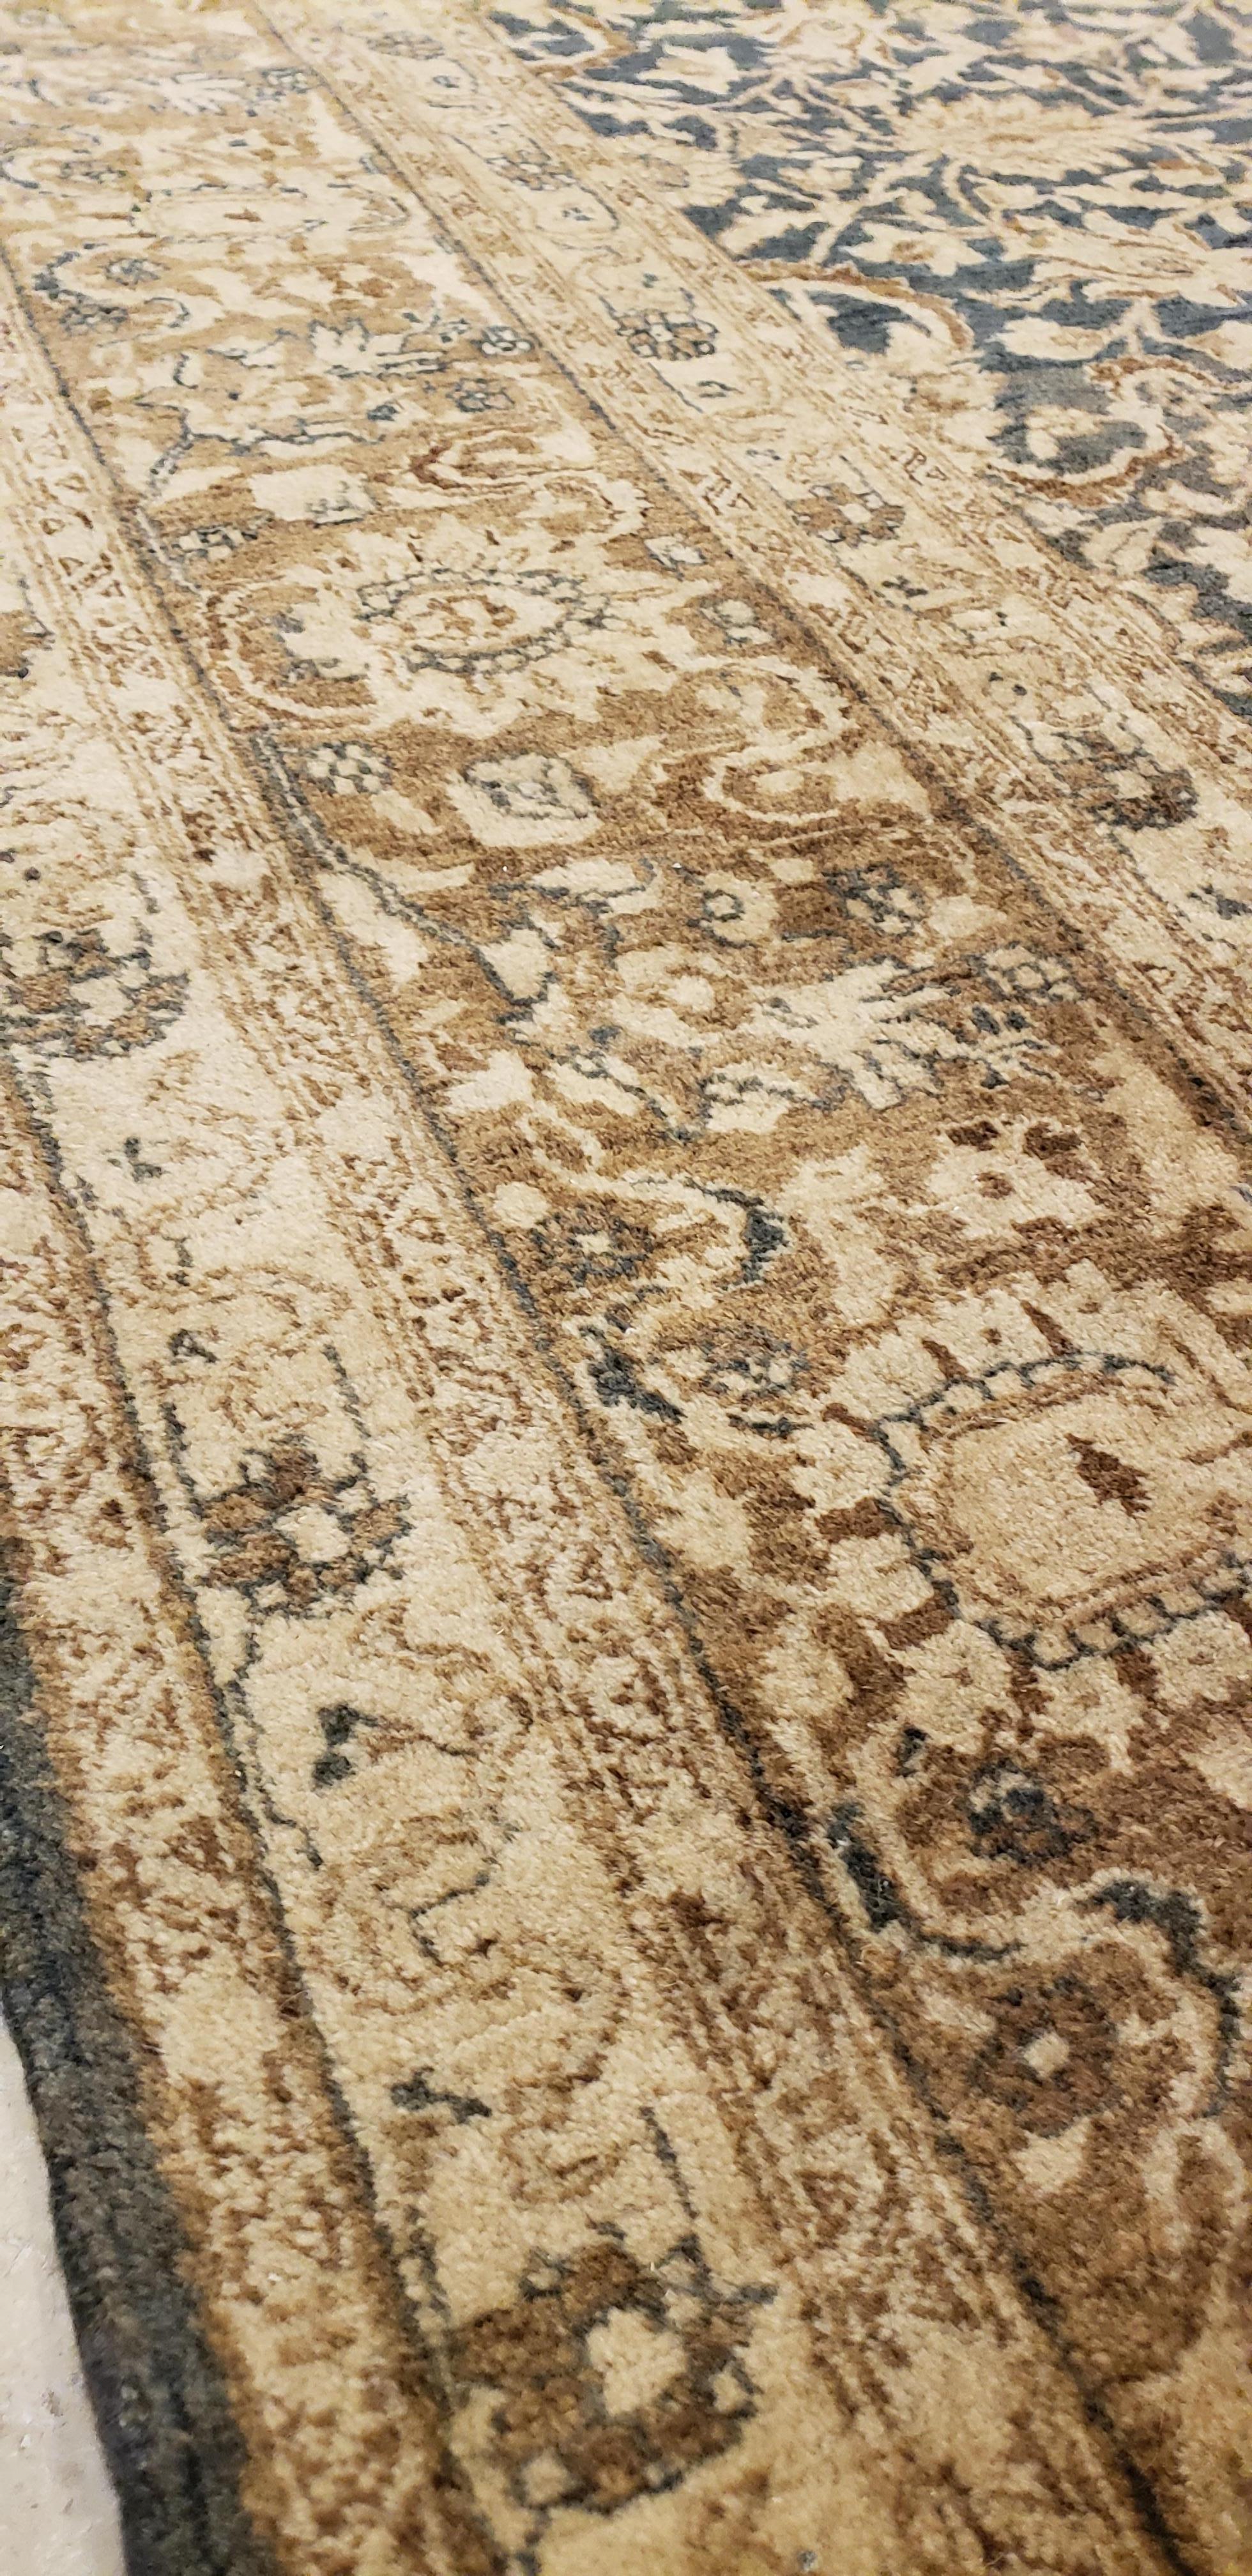 Antique Persian Tabriz Carpet, Handmade Oriental Rug, Beige, Gray/Blue, Taupe 2